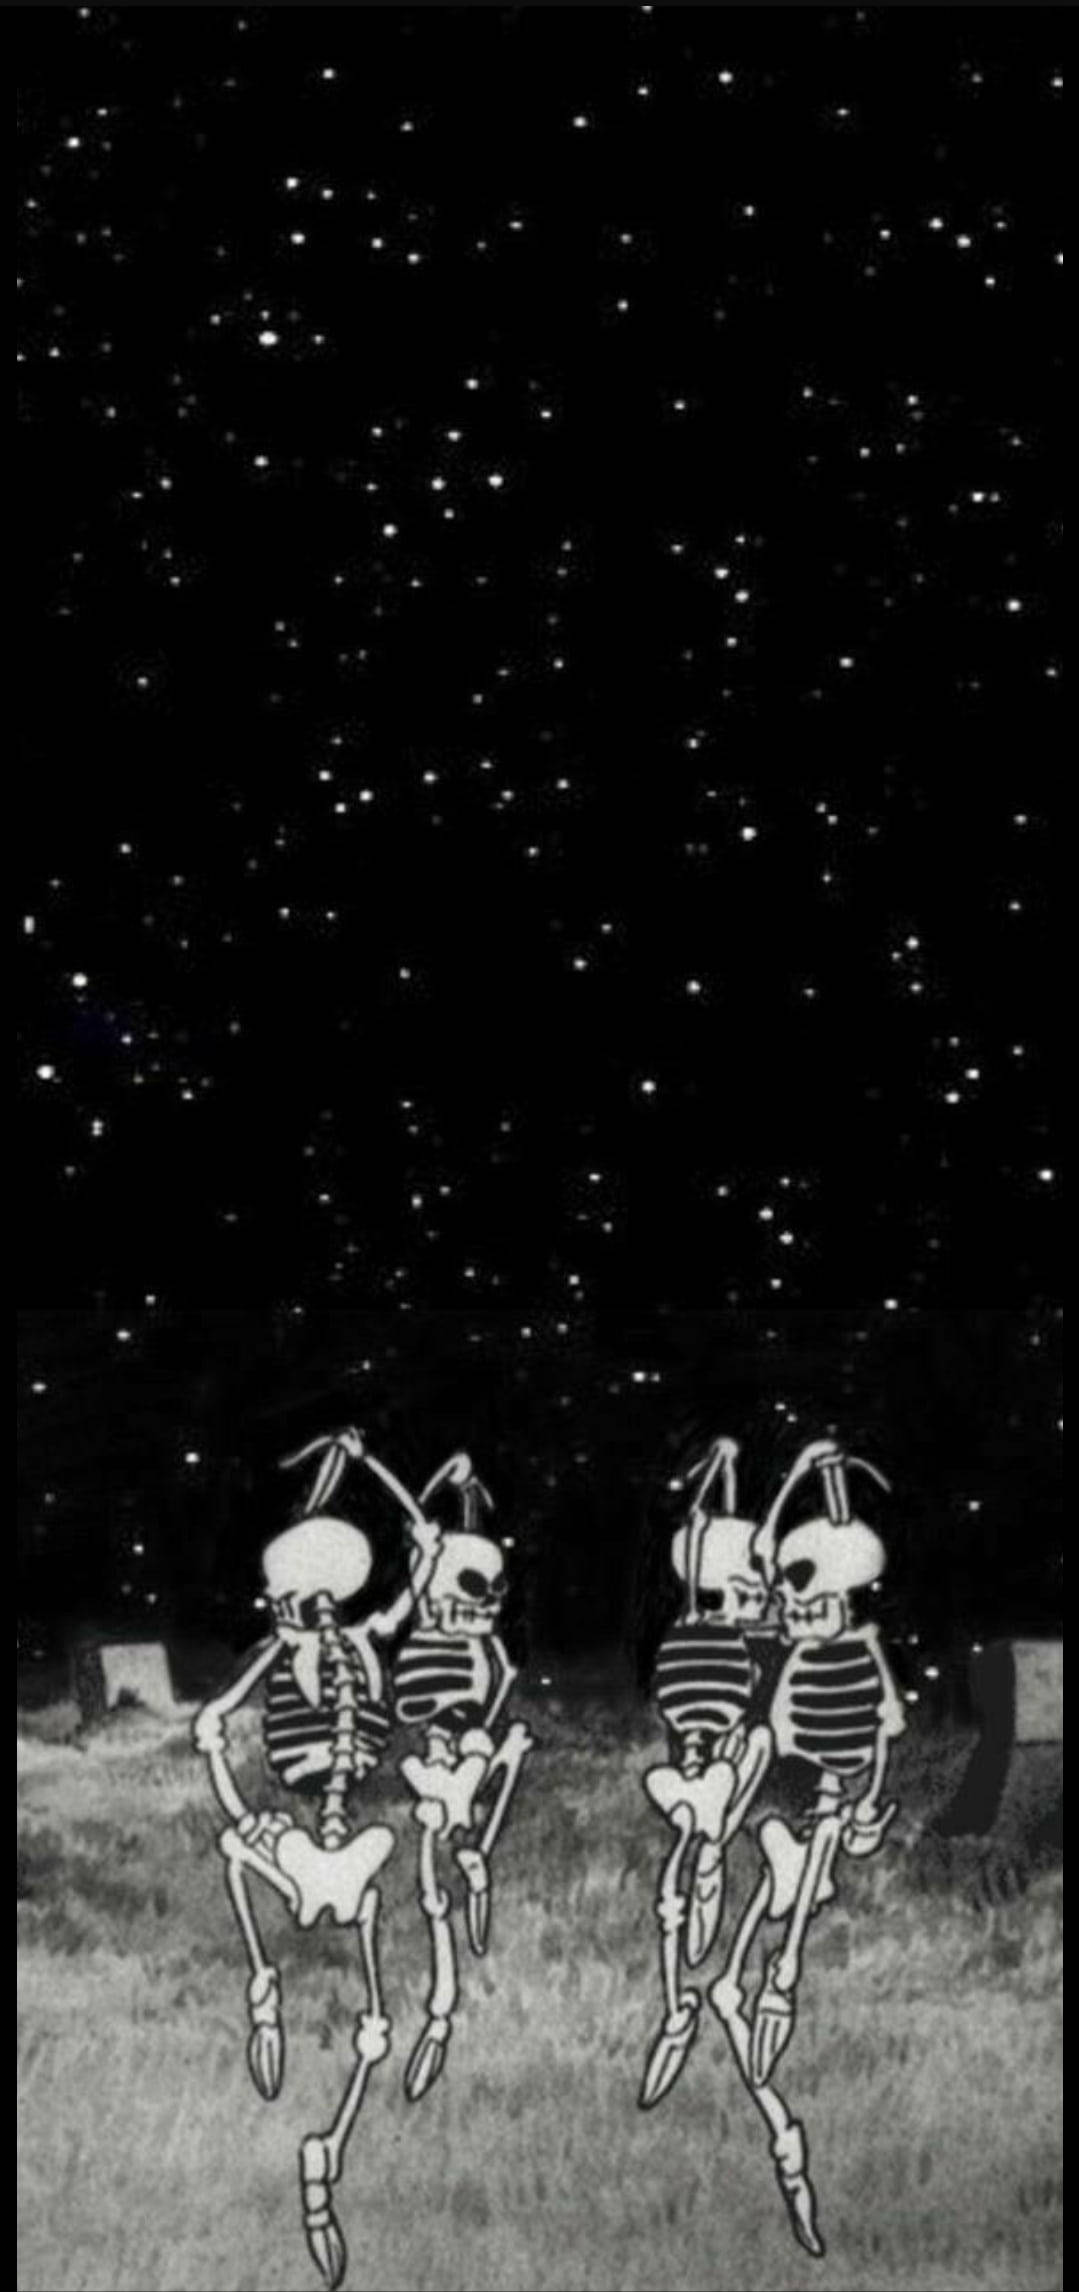 Dancing Group Skeleton Aesthetic Night Sky Background